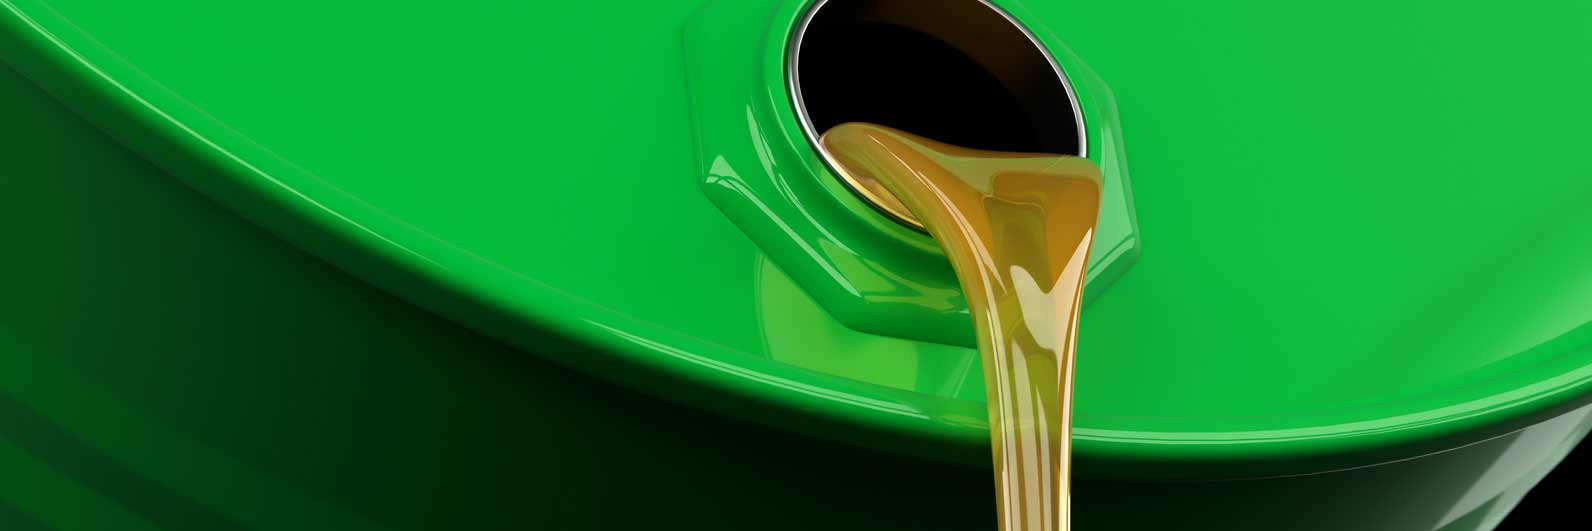 Un chorro de aceite que sale de un barril verde